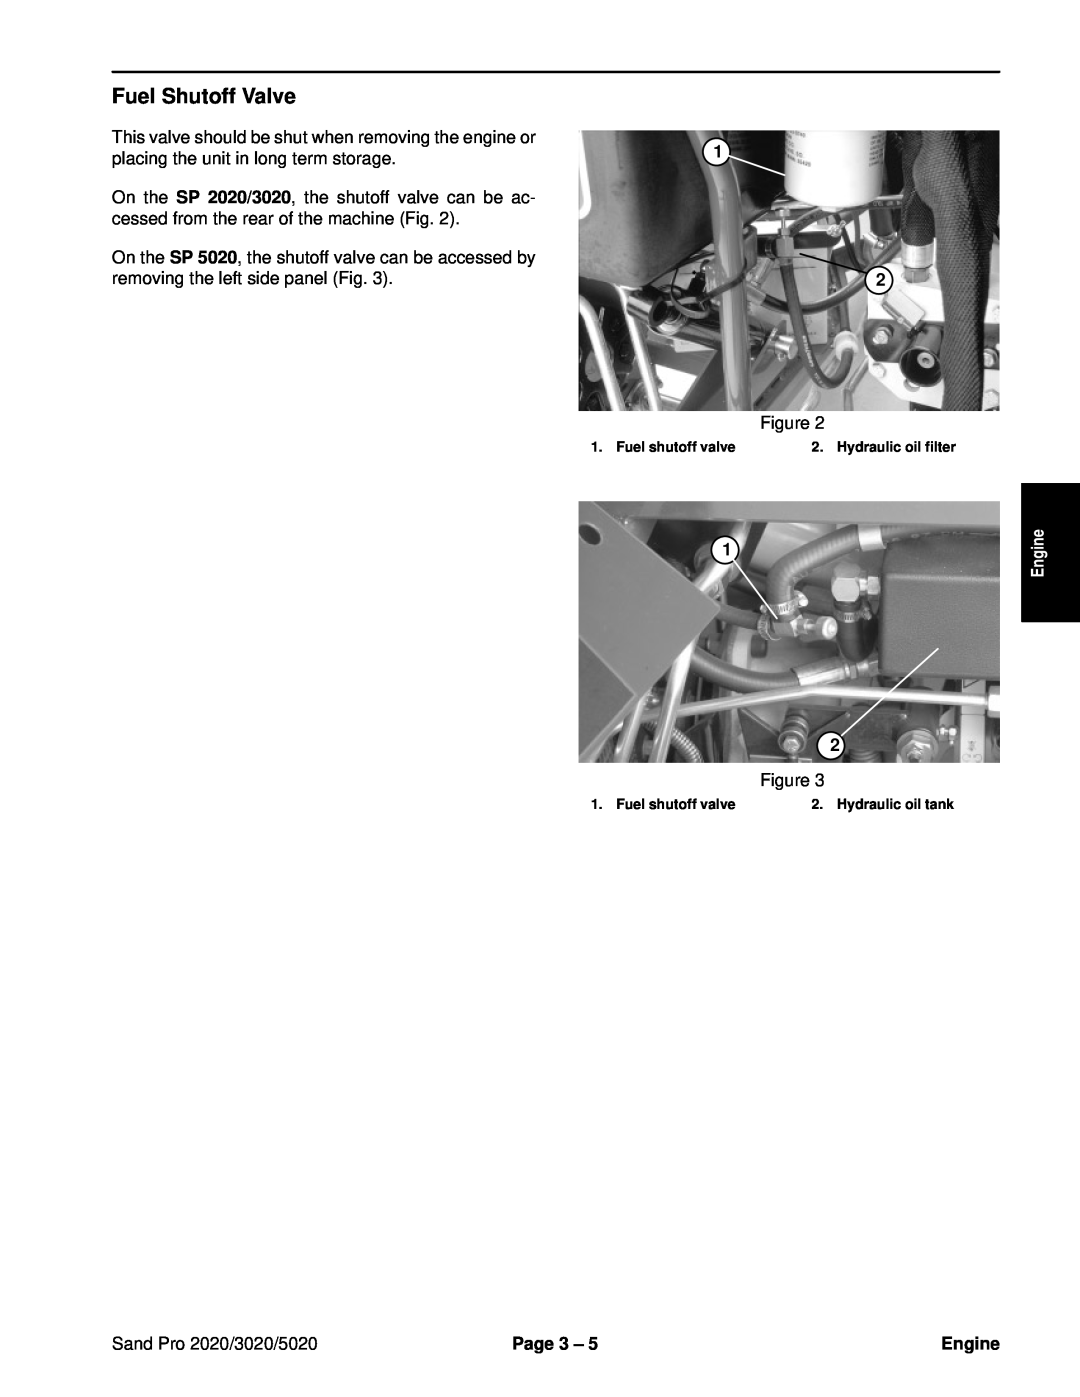 Toro service manual Fuel Shutoff Valve, Engine, Sand Pro 2020/3020/5020, Page 3 